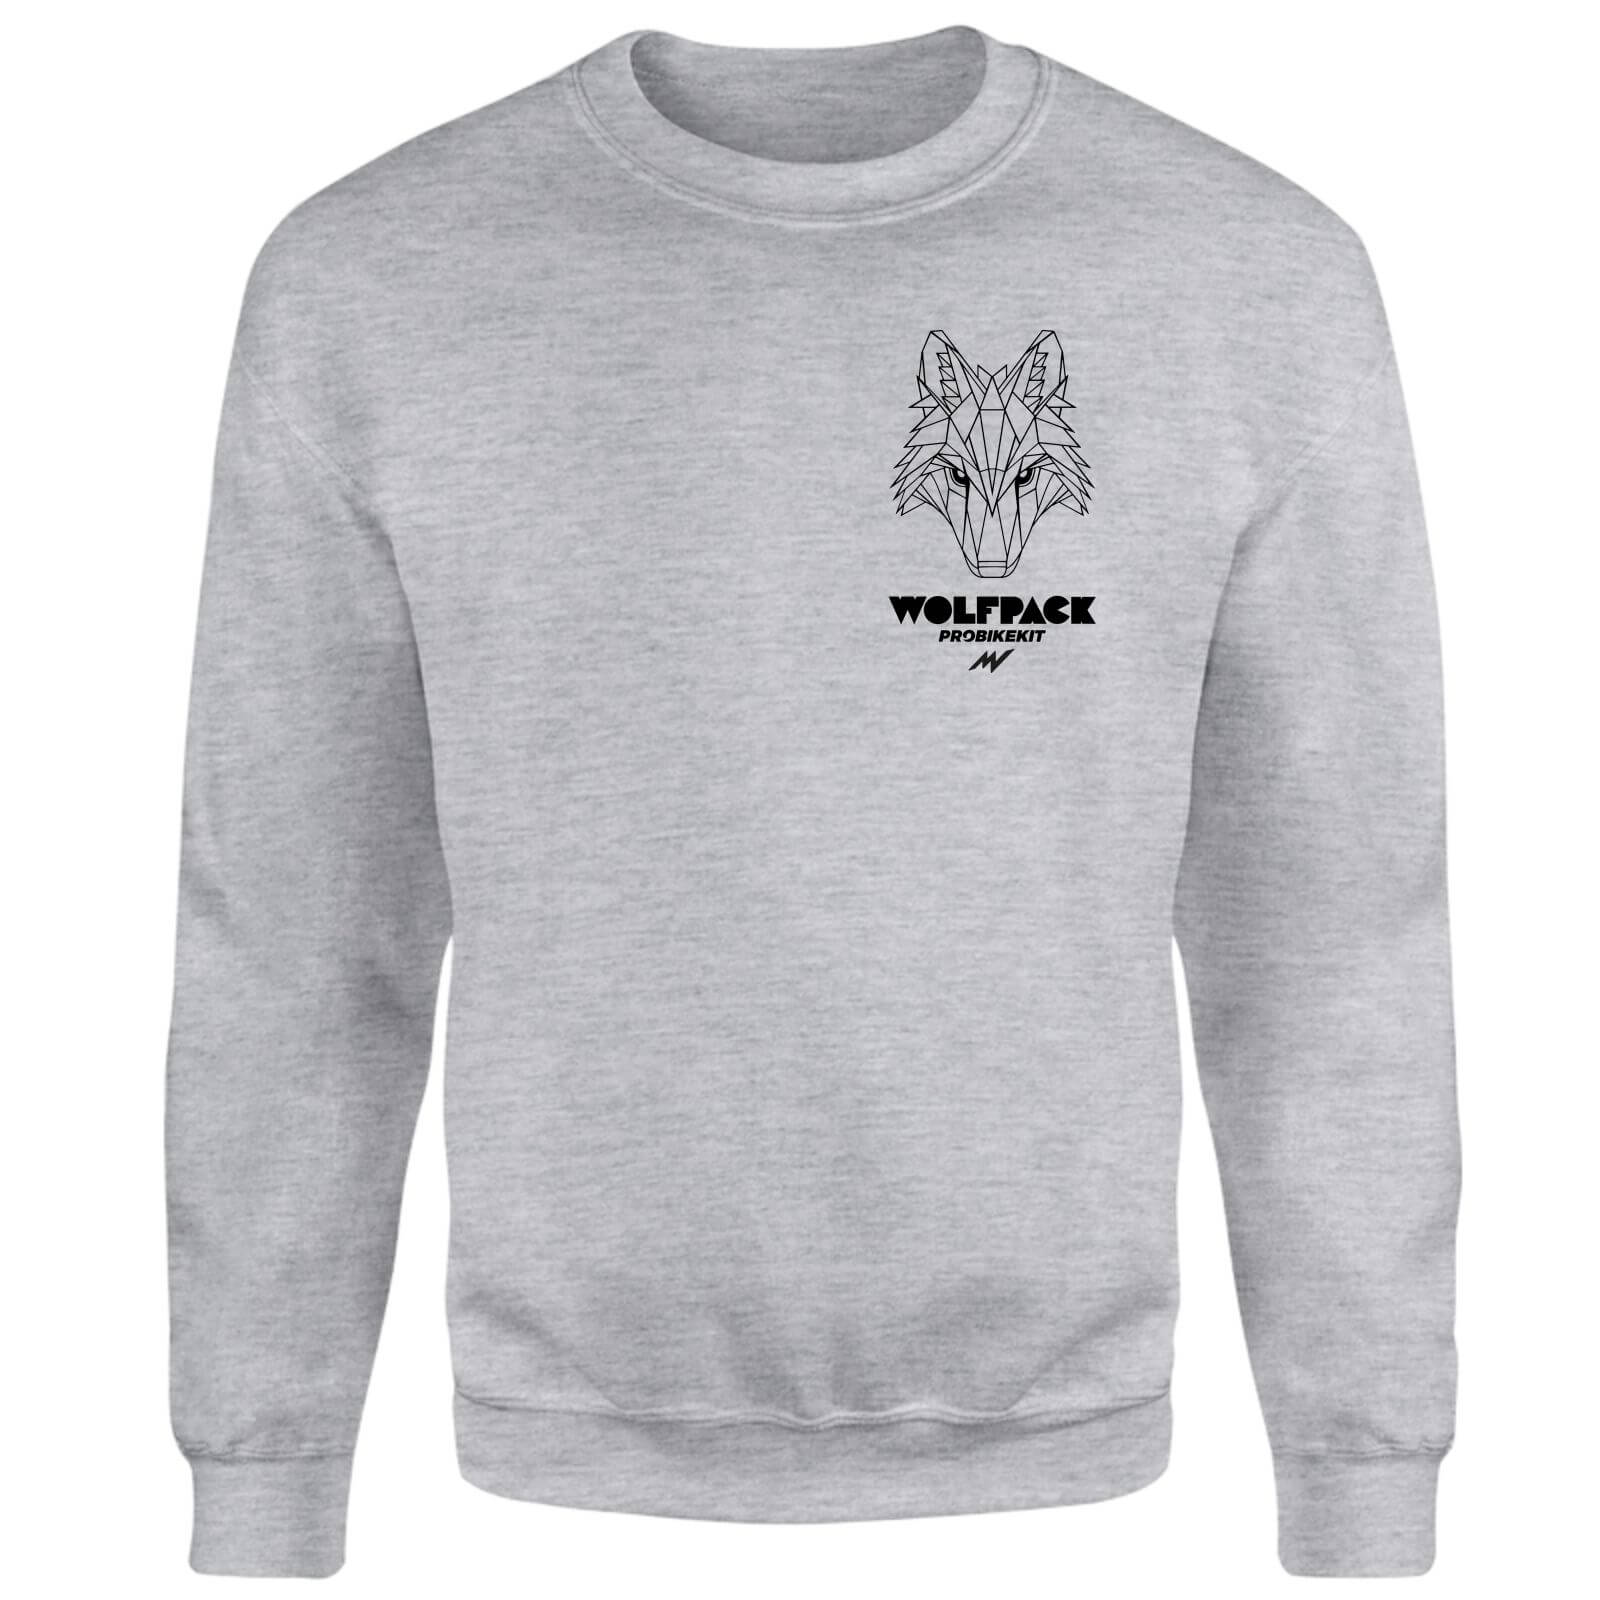 Wolfpack Pocket Sweatshirt - Grey - S